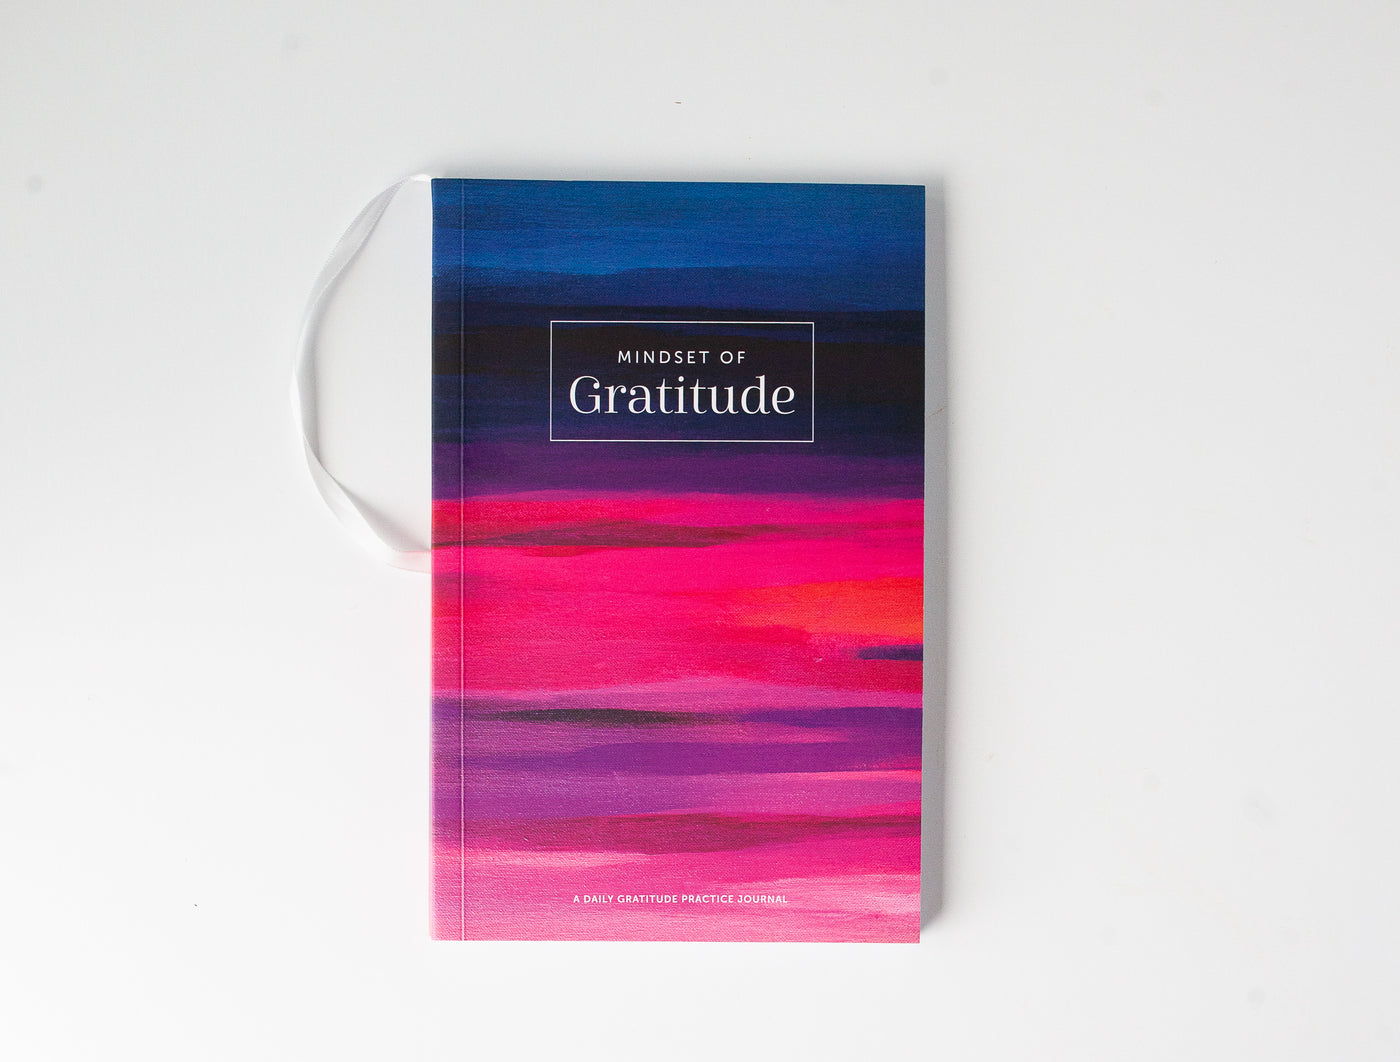 2023 Gratitude Journal